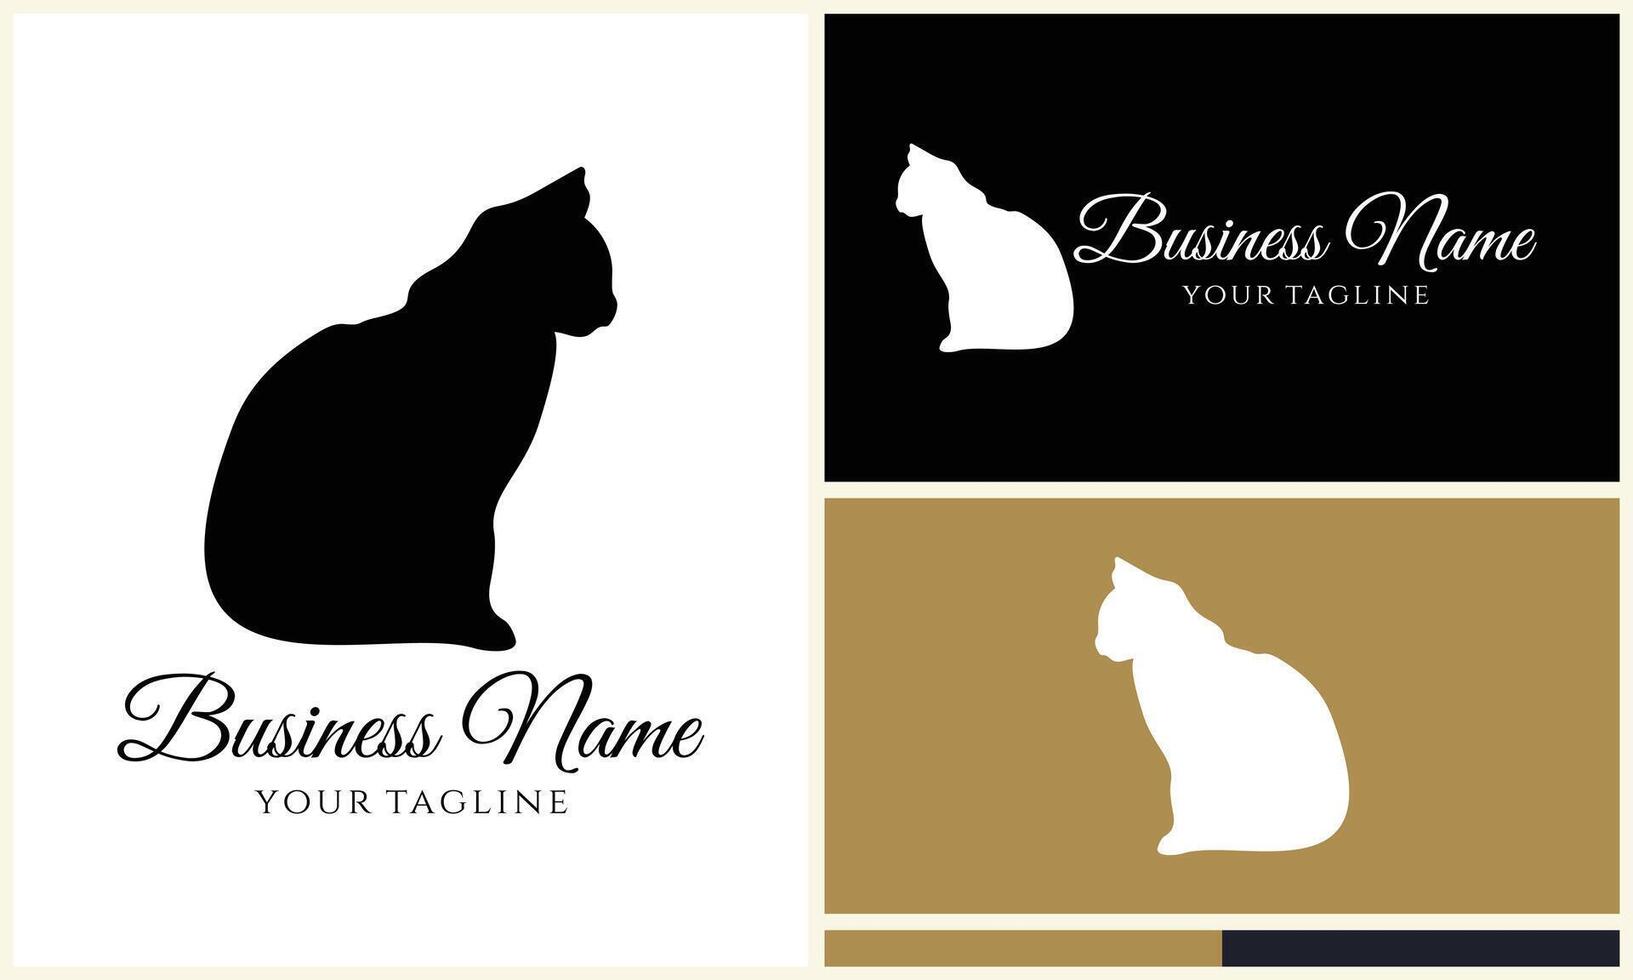 silhouette vector cat logo template